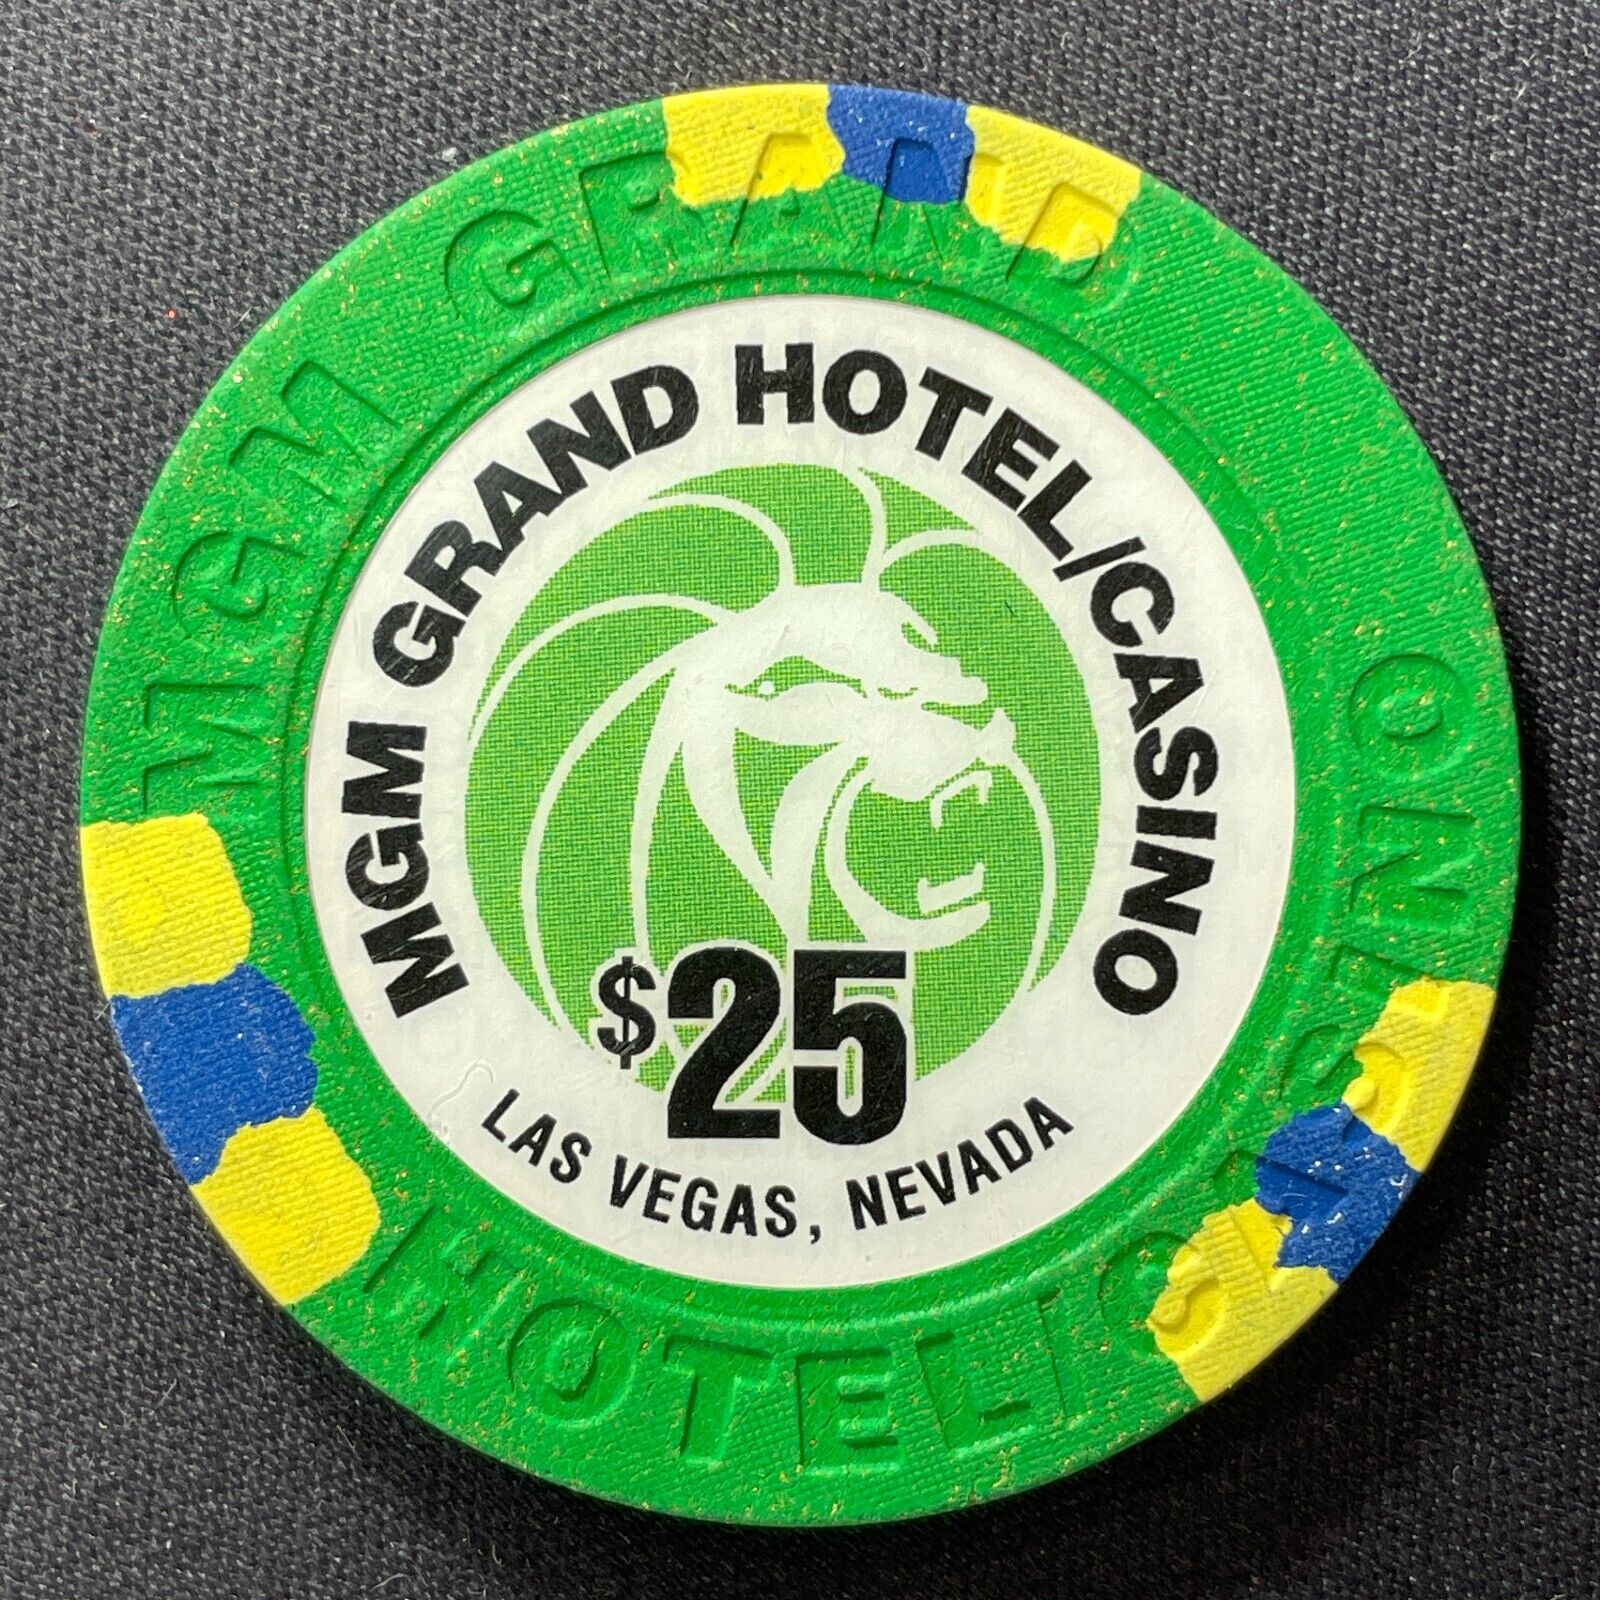 MGM Grand Las Vegas $25 casino chip house chip 1996 gaming token poker LV25